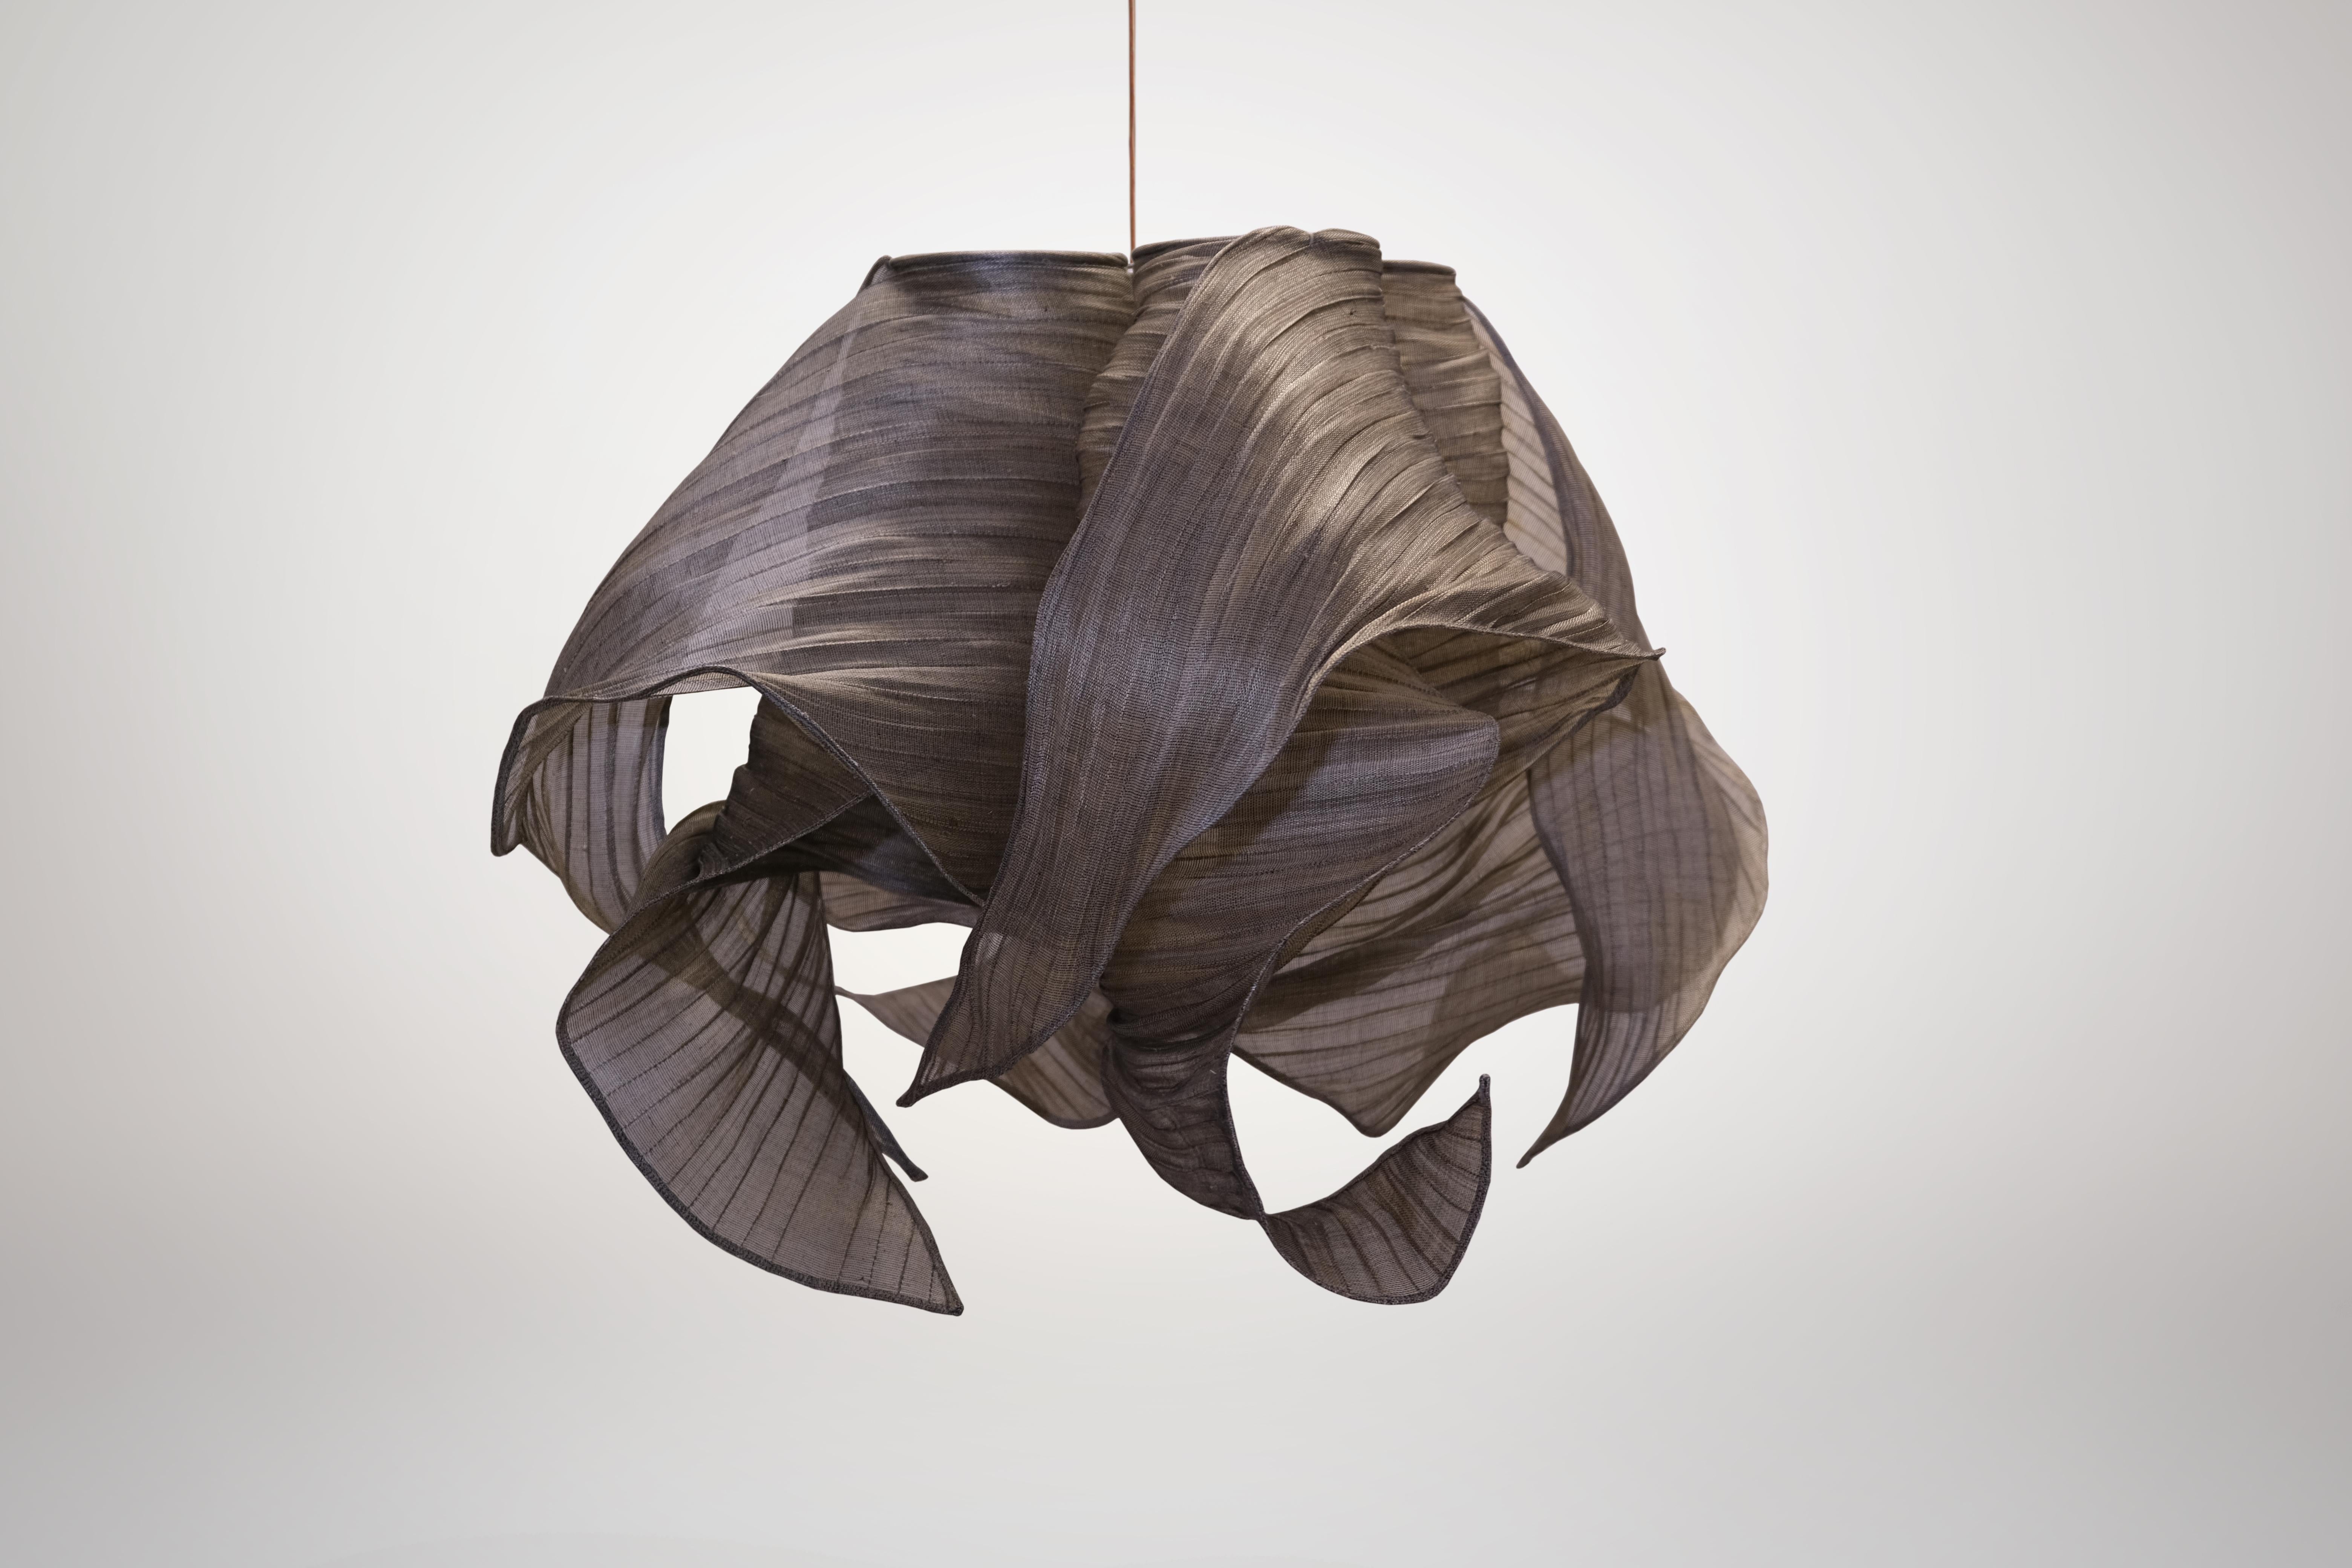 Woven Modern Fabric Pendant Light by Studio Mirei, Nebula 60 cm, from Costantini 